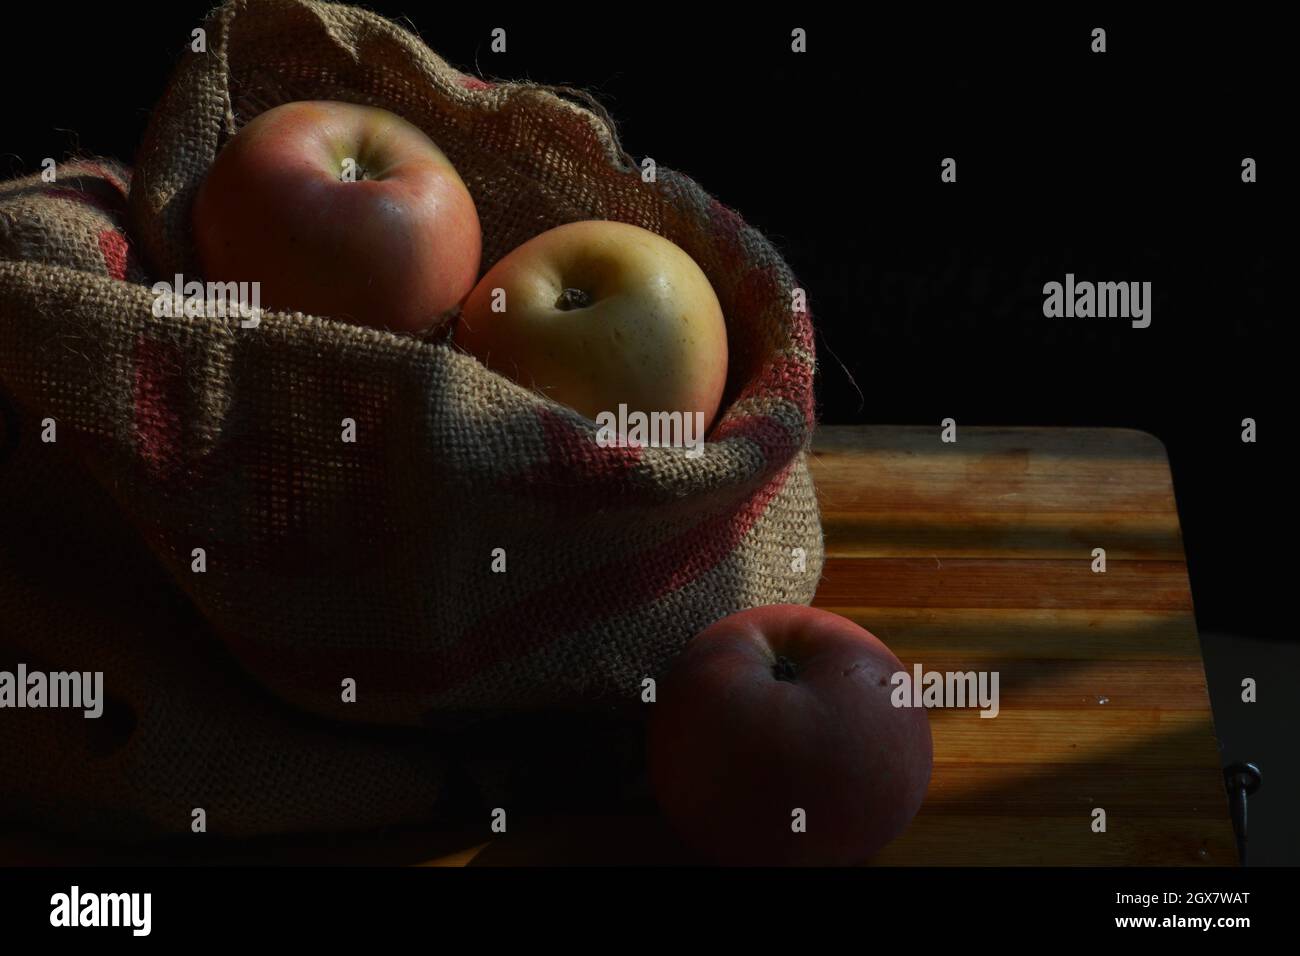 Apples photographs Stock Photo